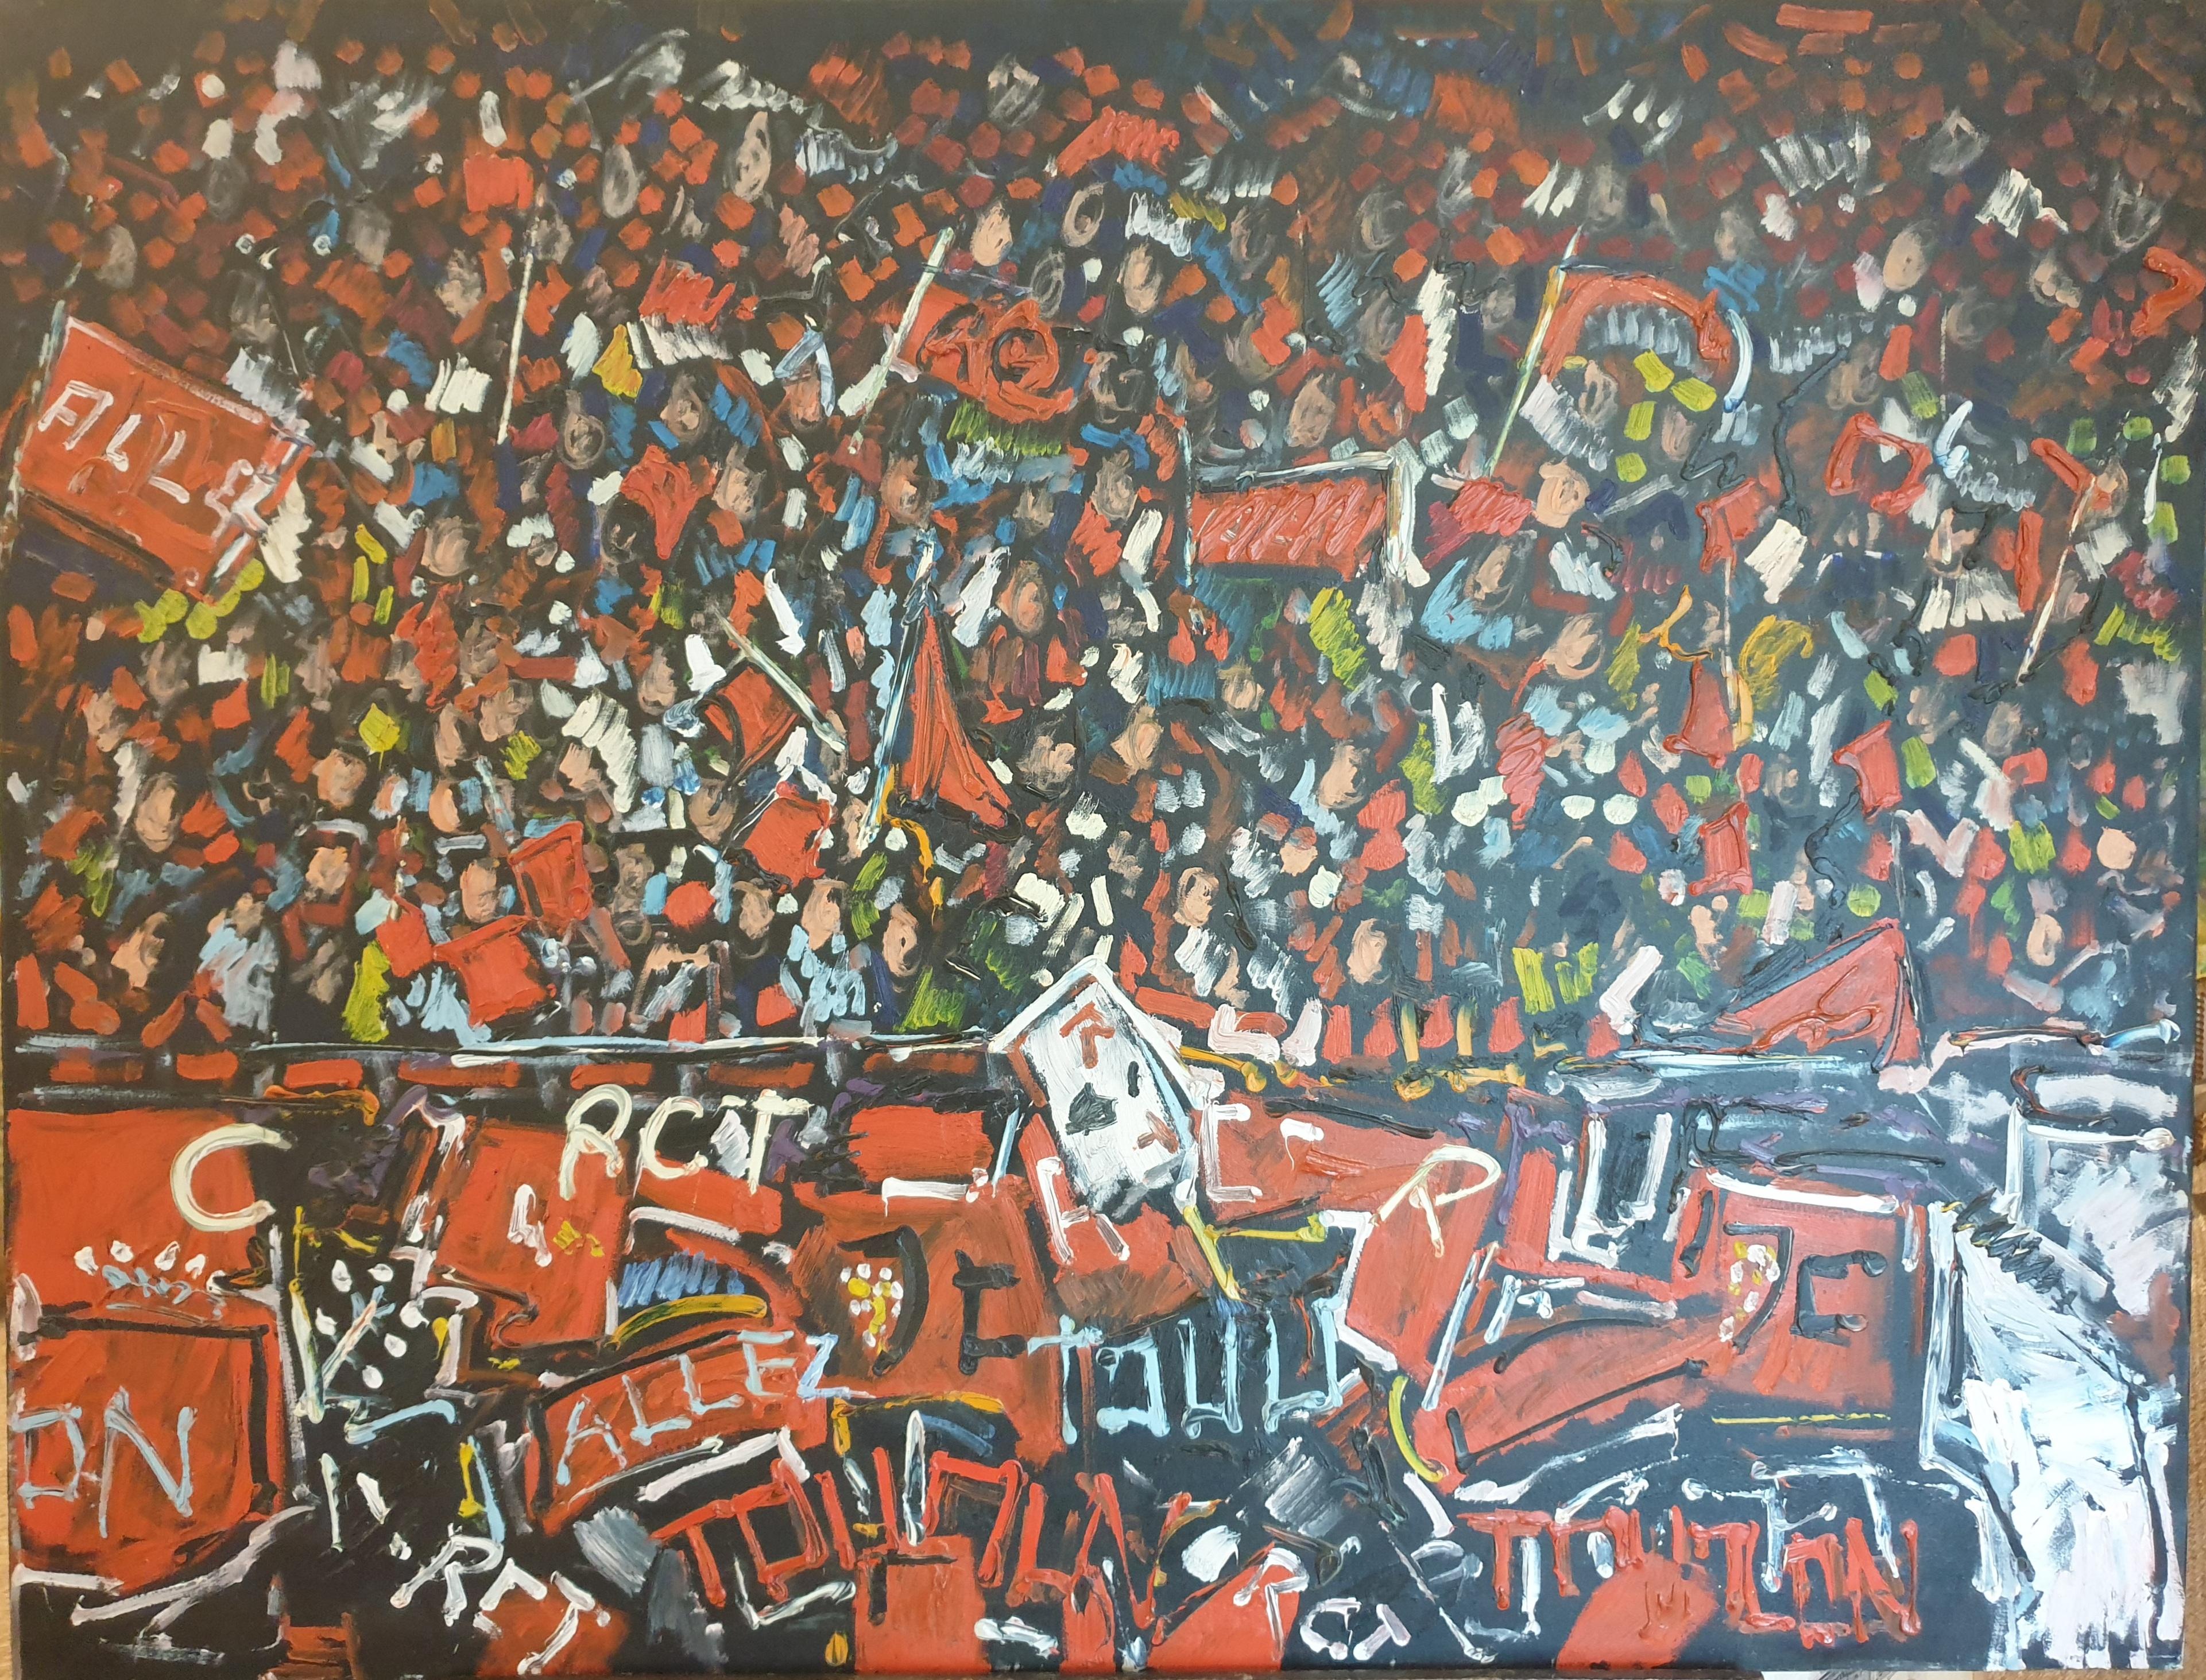 Abstract Painting Unknown - « Allez ! » à l'match. Rugby Club de Toulon. Grande huile expressionniste sur toile.